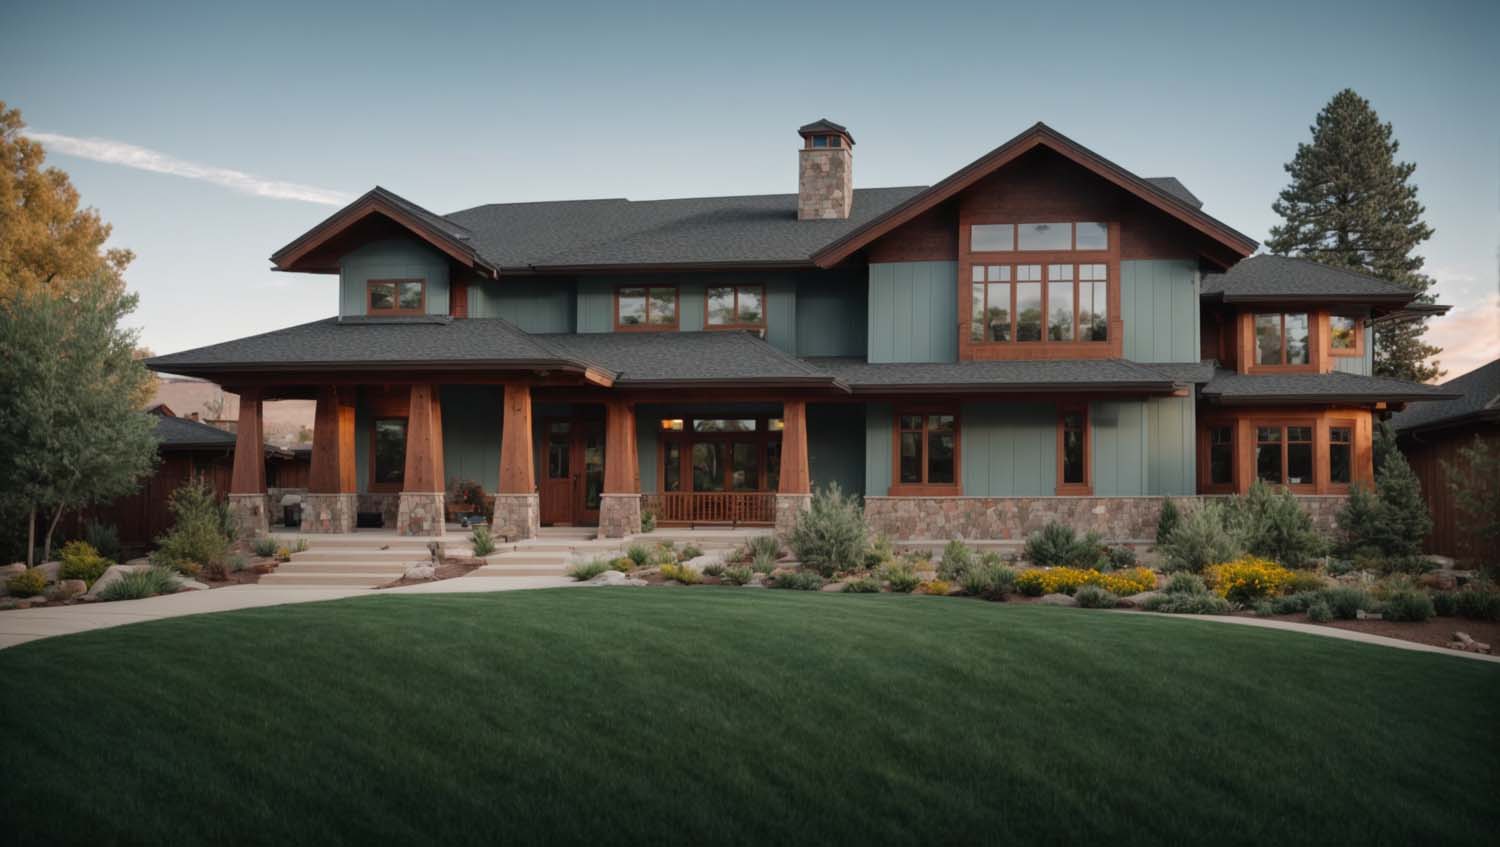 Ranch Style Mansion with Vertical Plank Siding - Siding Colorado in Colorado Springs